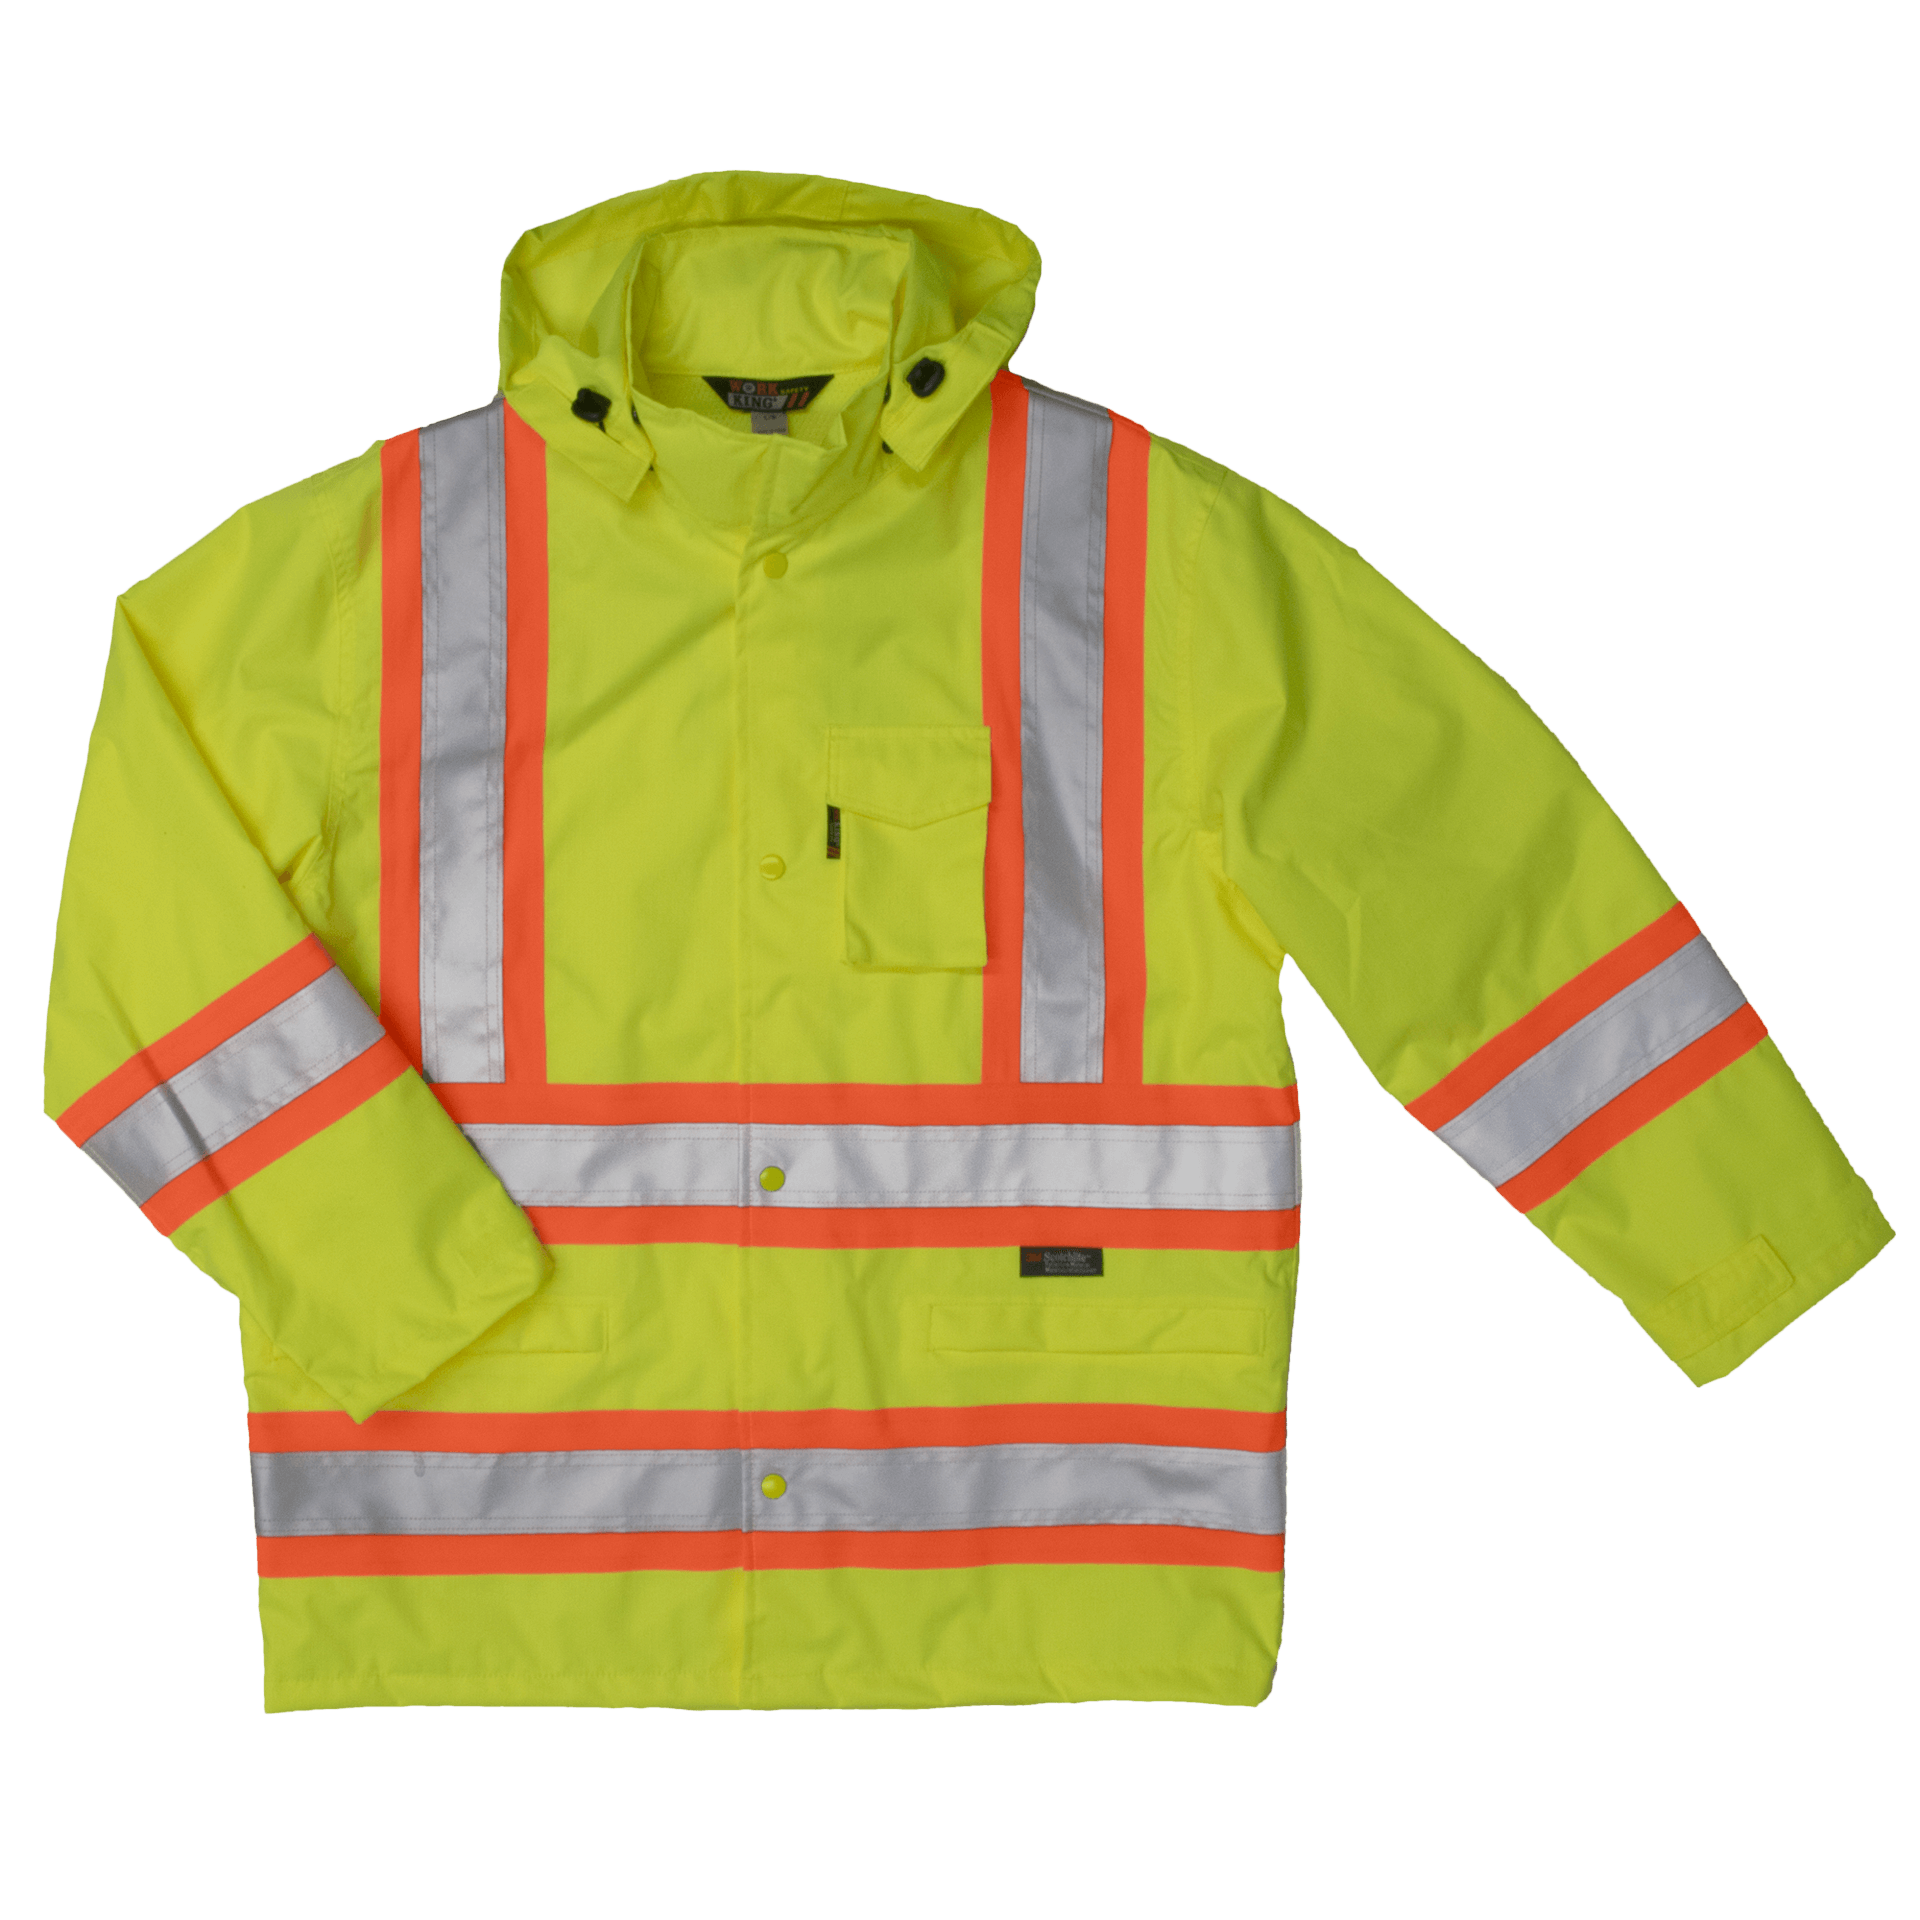 Tough Duck Safety Rain Jacket - S372 - Fluorescent Green